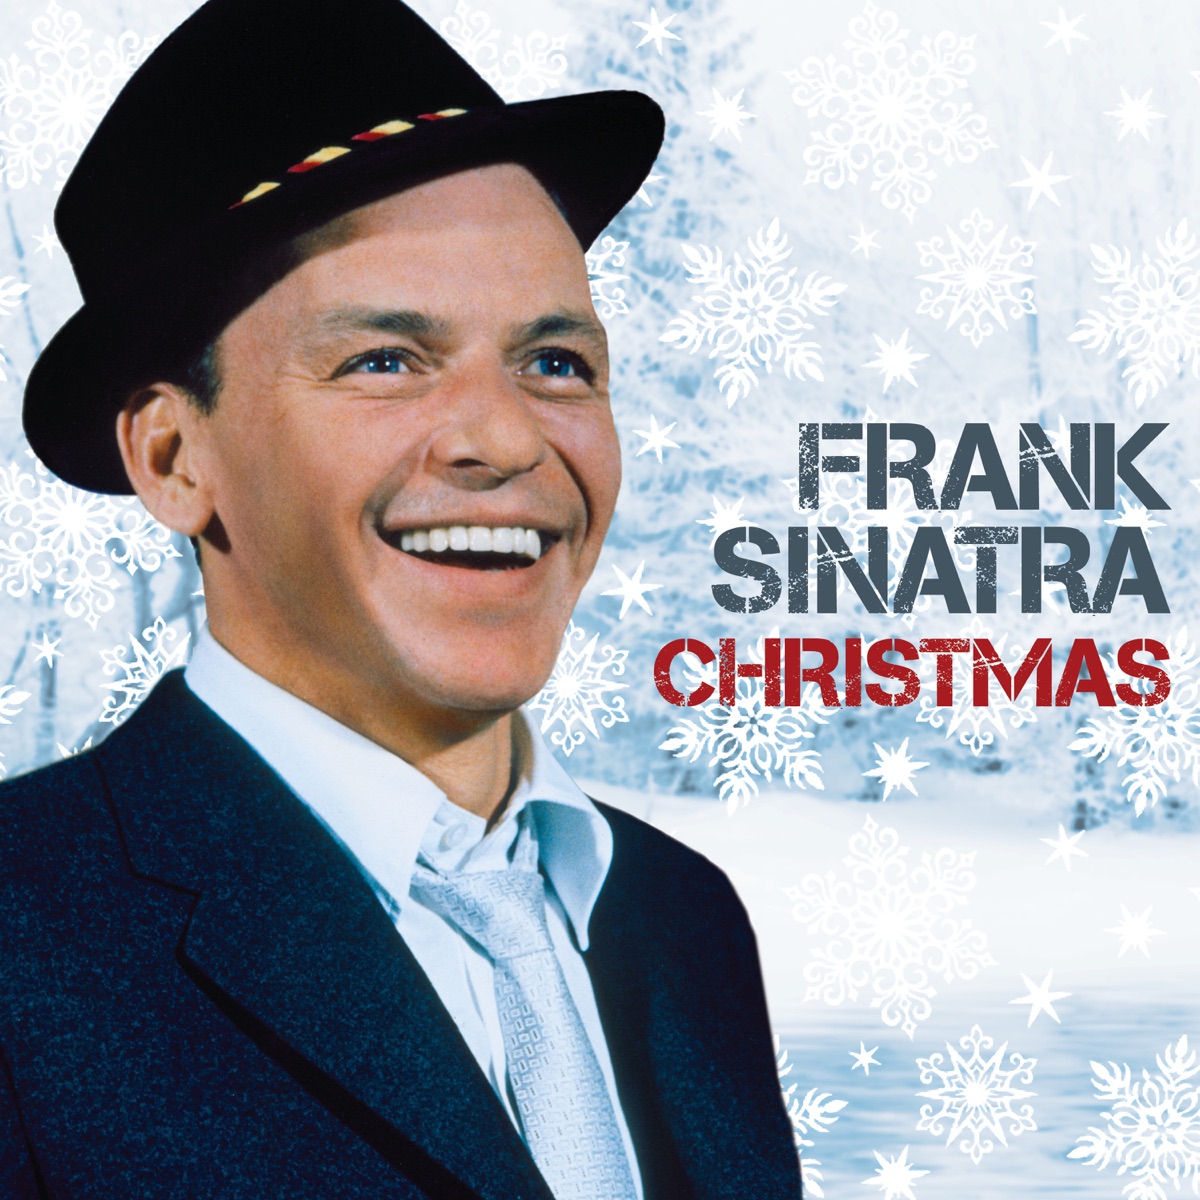 Buy Frank Sinatra, Dean Martin & Sammy Davis Jr. : The Rat Pack Live At The  Sands (CD, Album) Online for a great price –